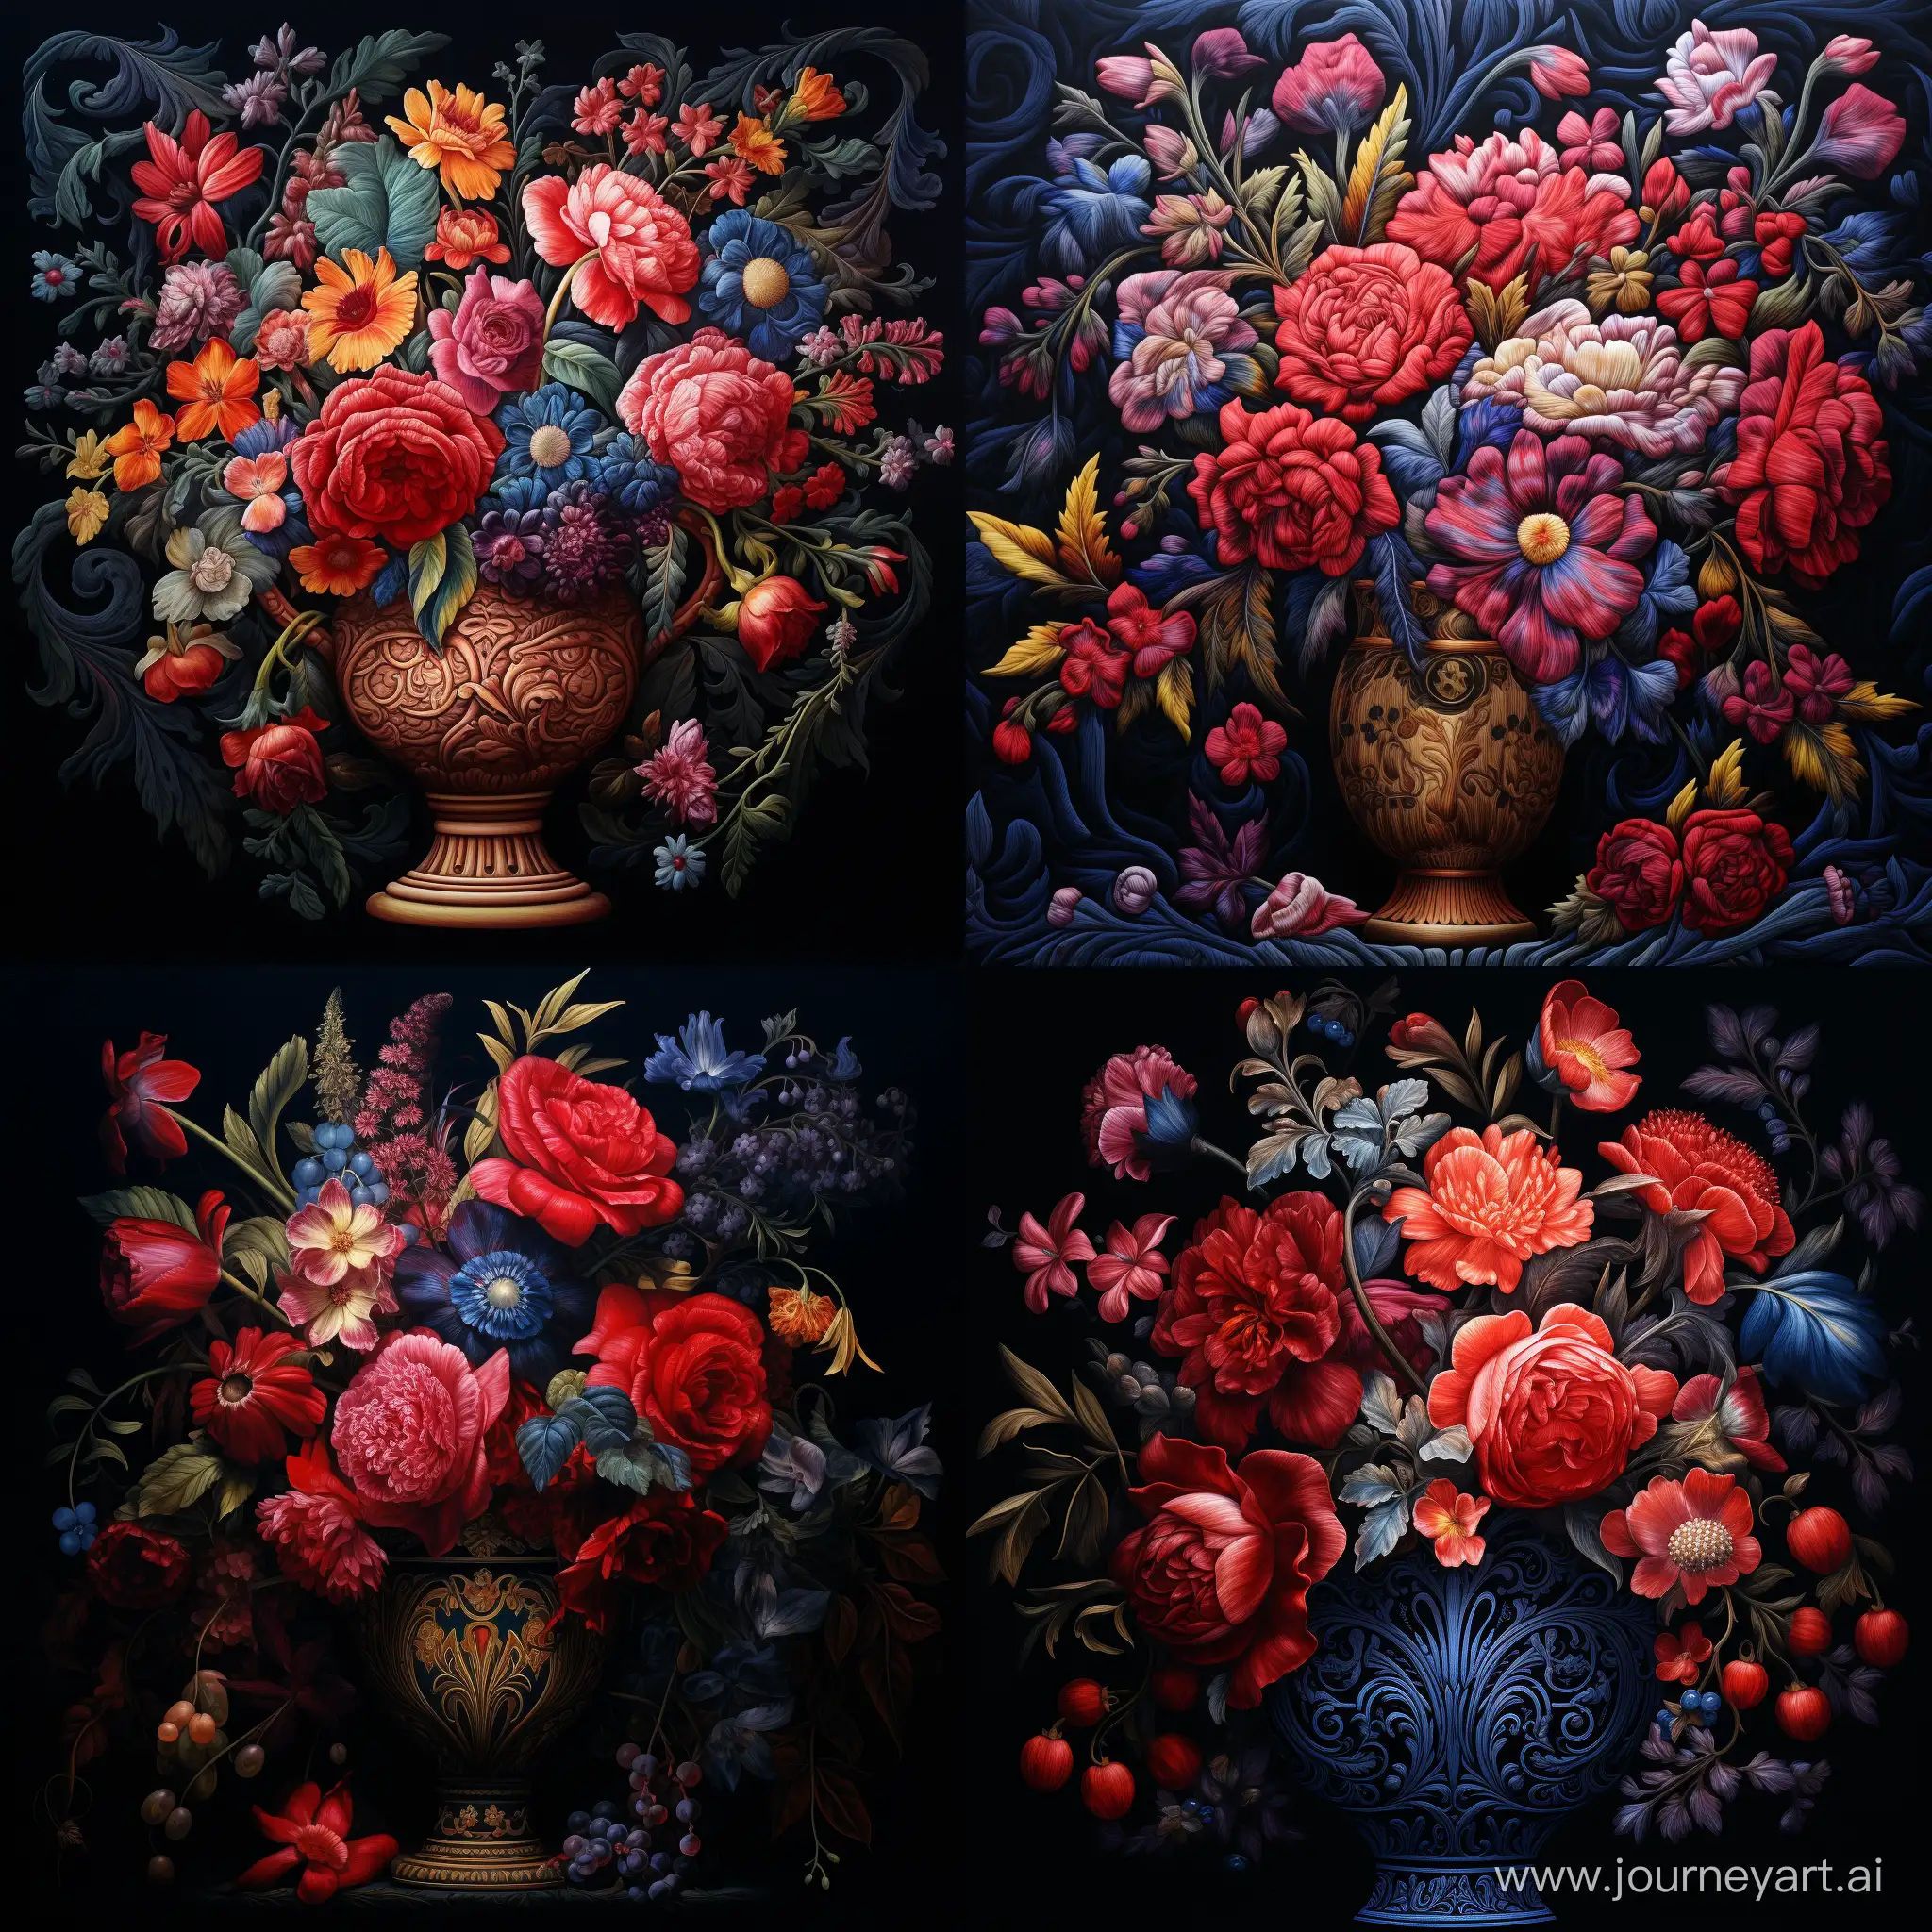 Baroque-Still-Life-Exquisite-Floral-Arrangement-in-Ornate-Vase